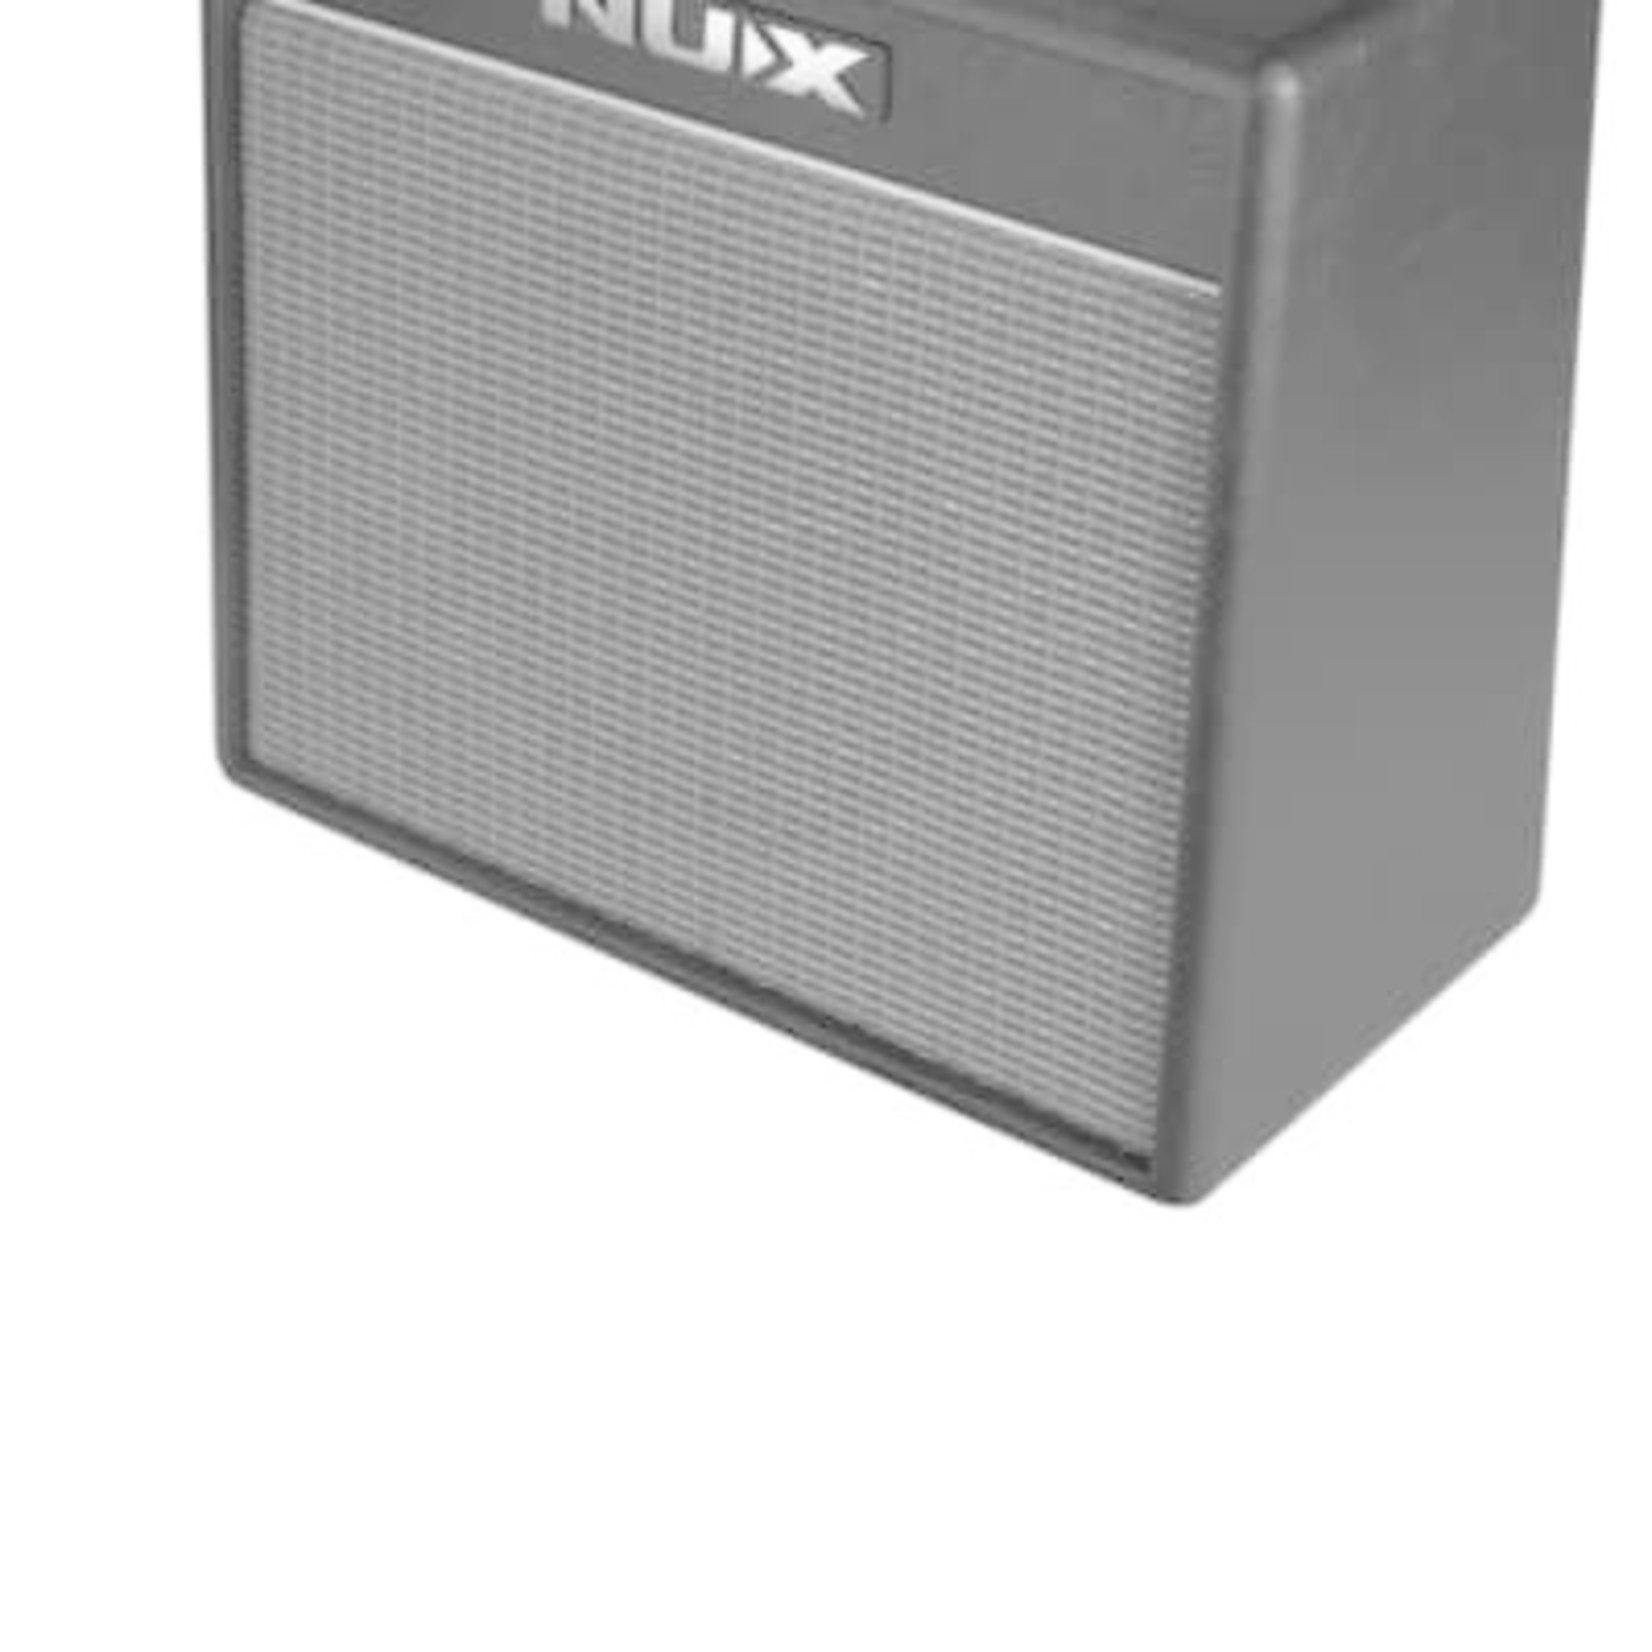 NuX NuX Mighty 40 BT Guitar Amplifier